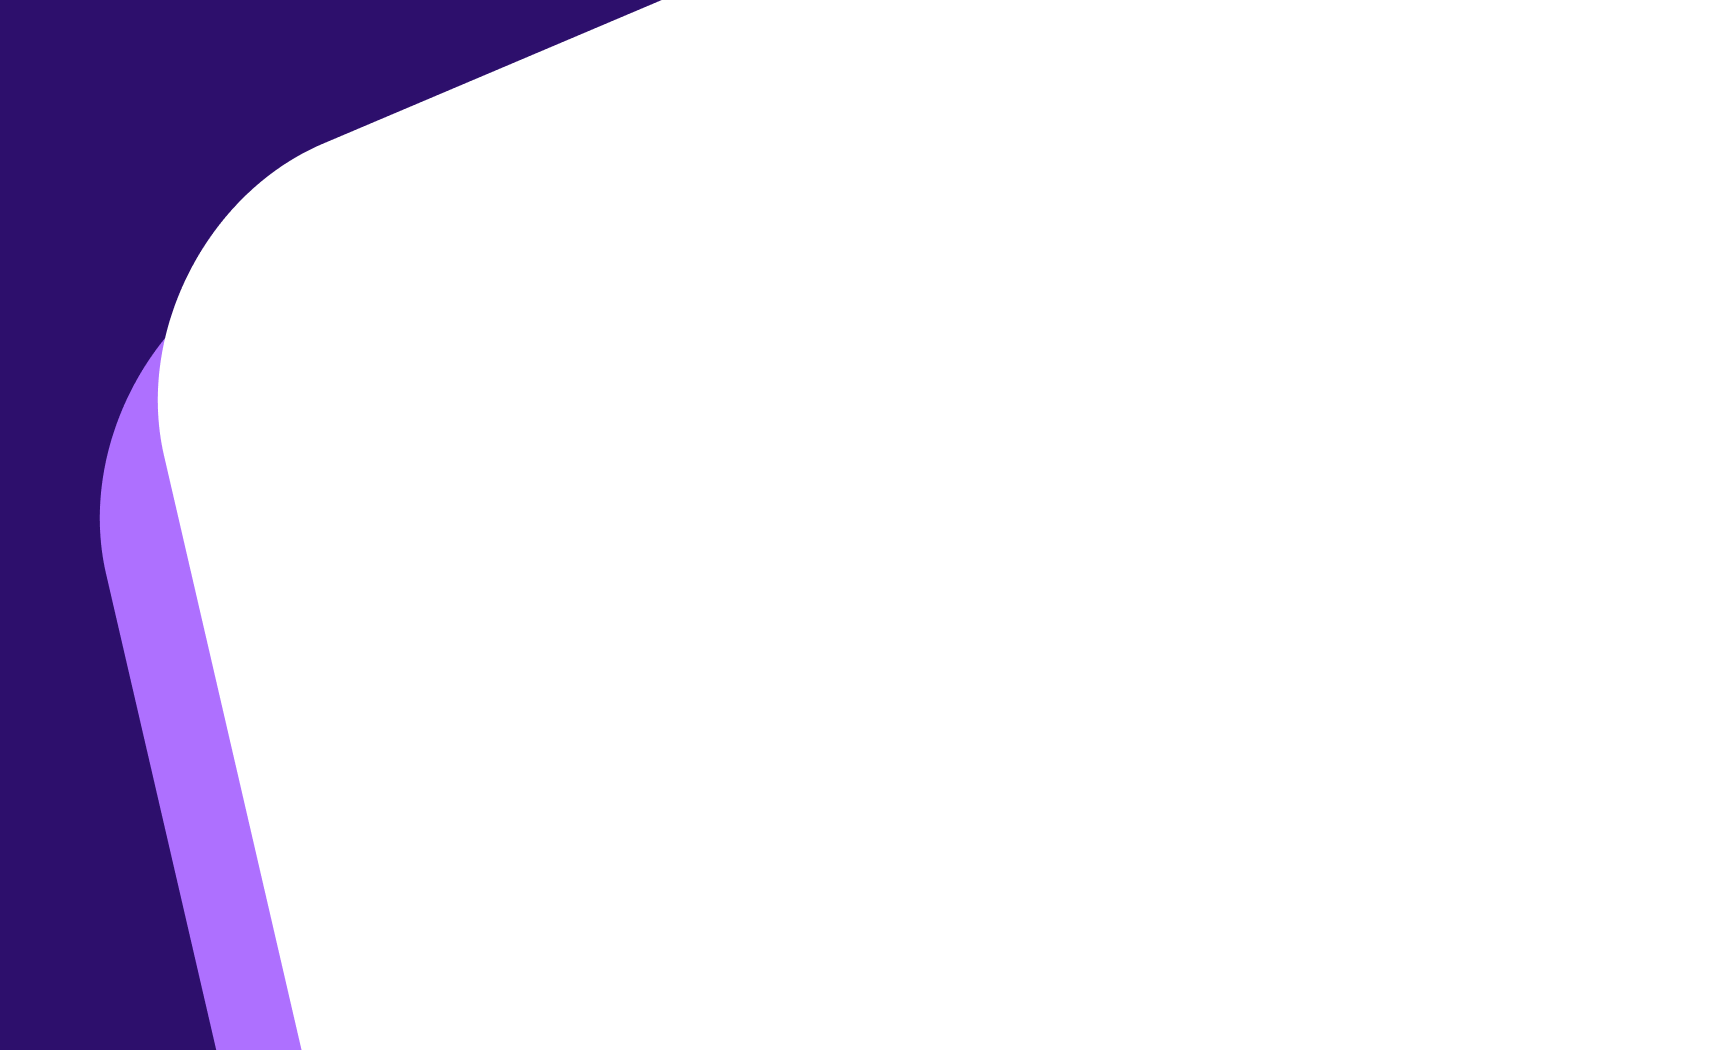 Black and purple abstract desktop background design